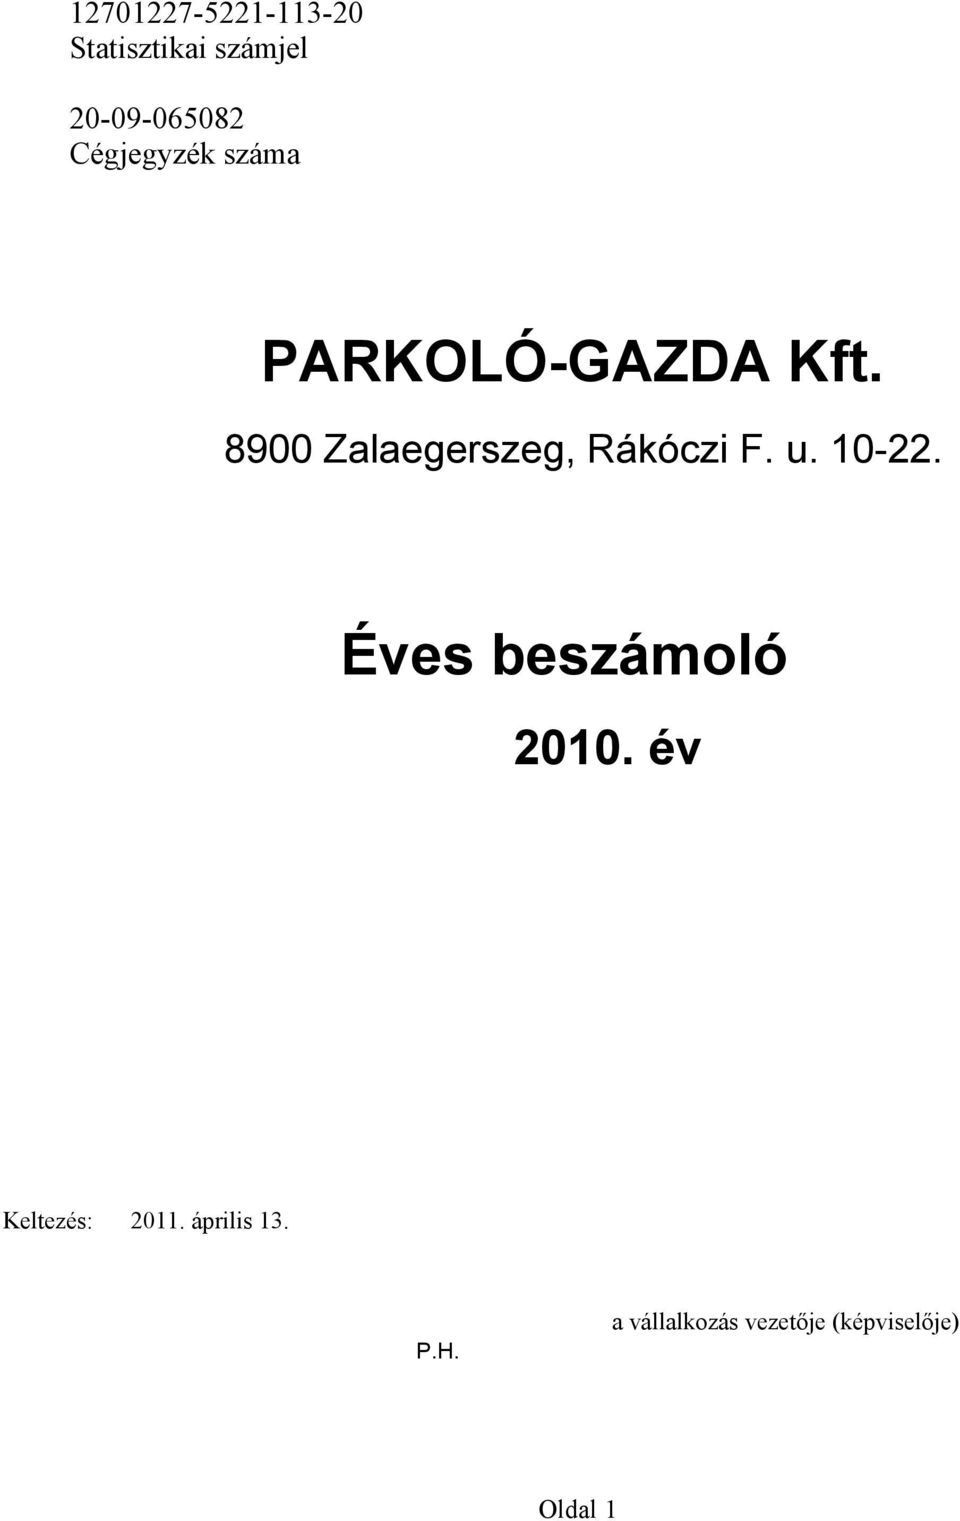 PARKOLÓ-GAZDA Kft.